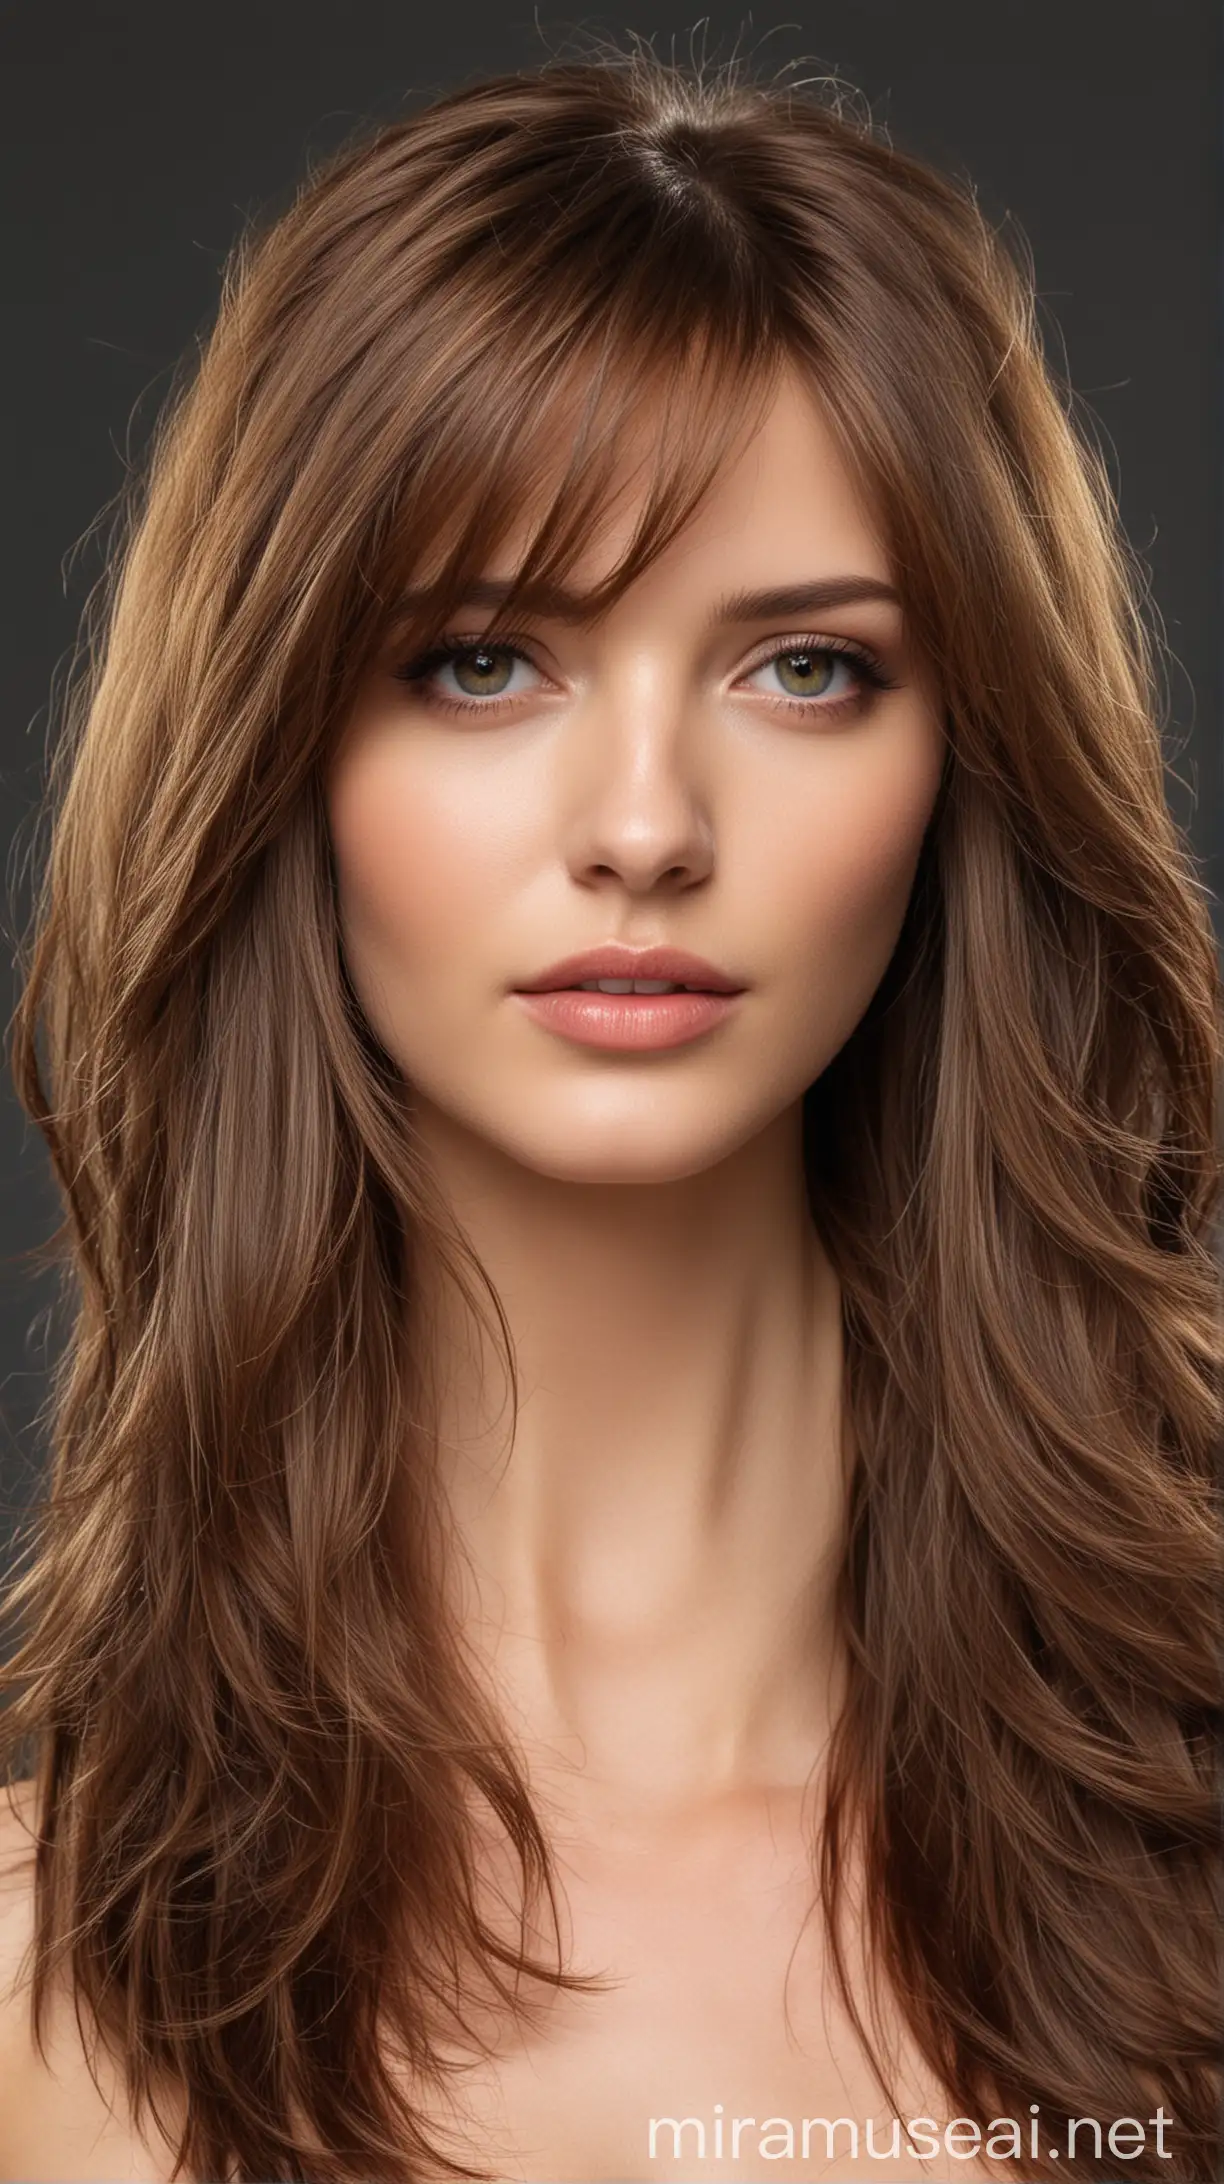 Beautiful model with long layers haircut